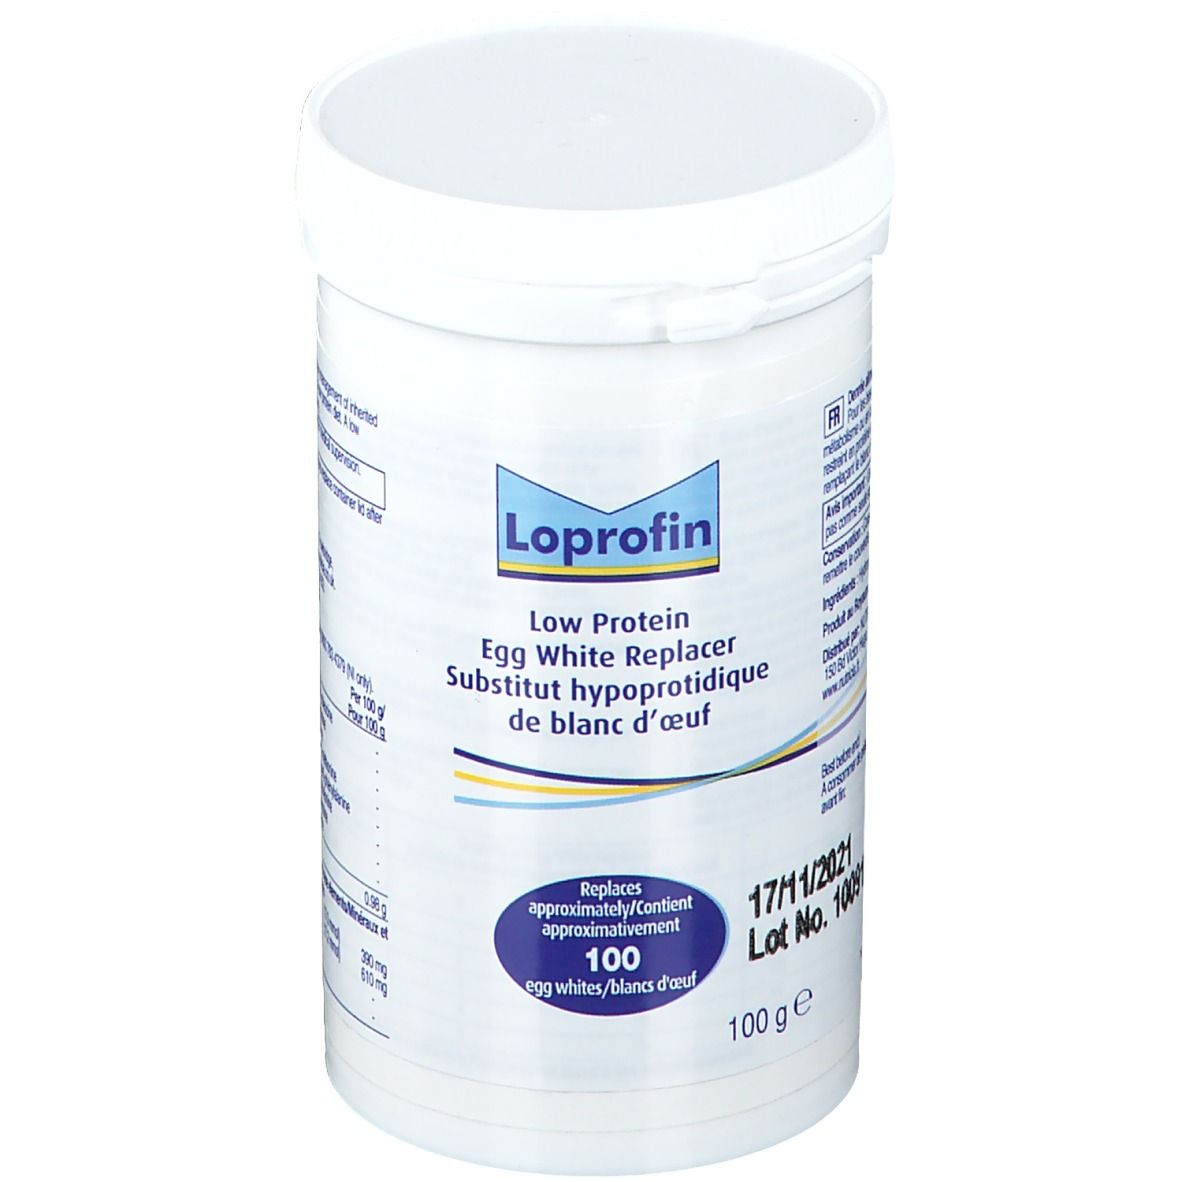 Loprofin Substitut hypoprotidique de blanc d'œufs